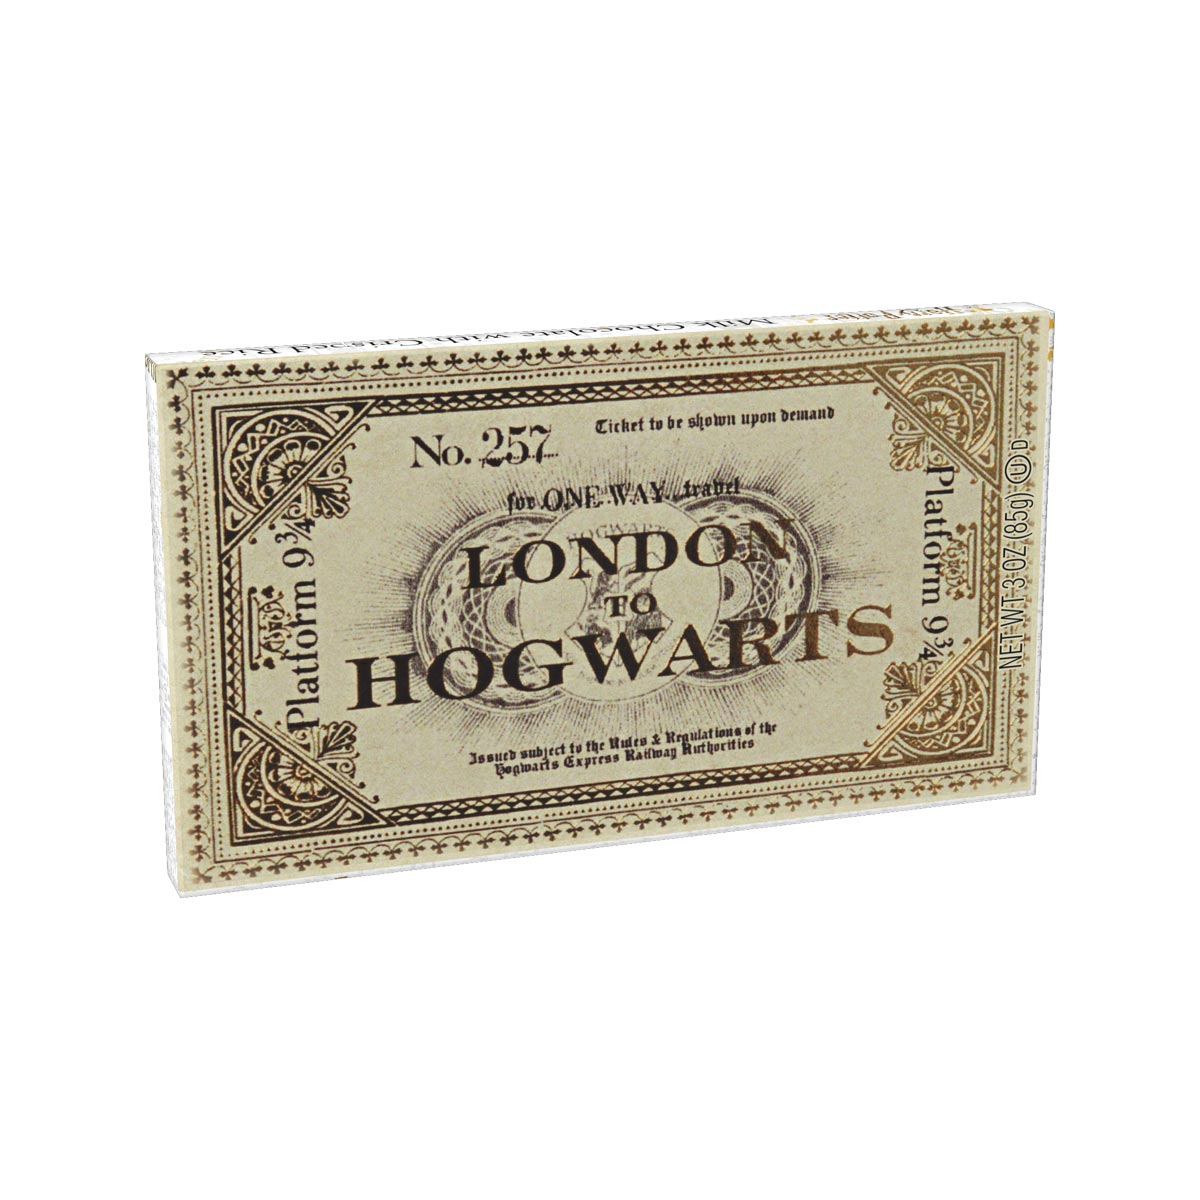 Harry Potter Chocolate Bar Ticket to Hogwarts